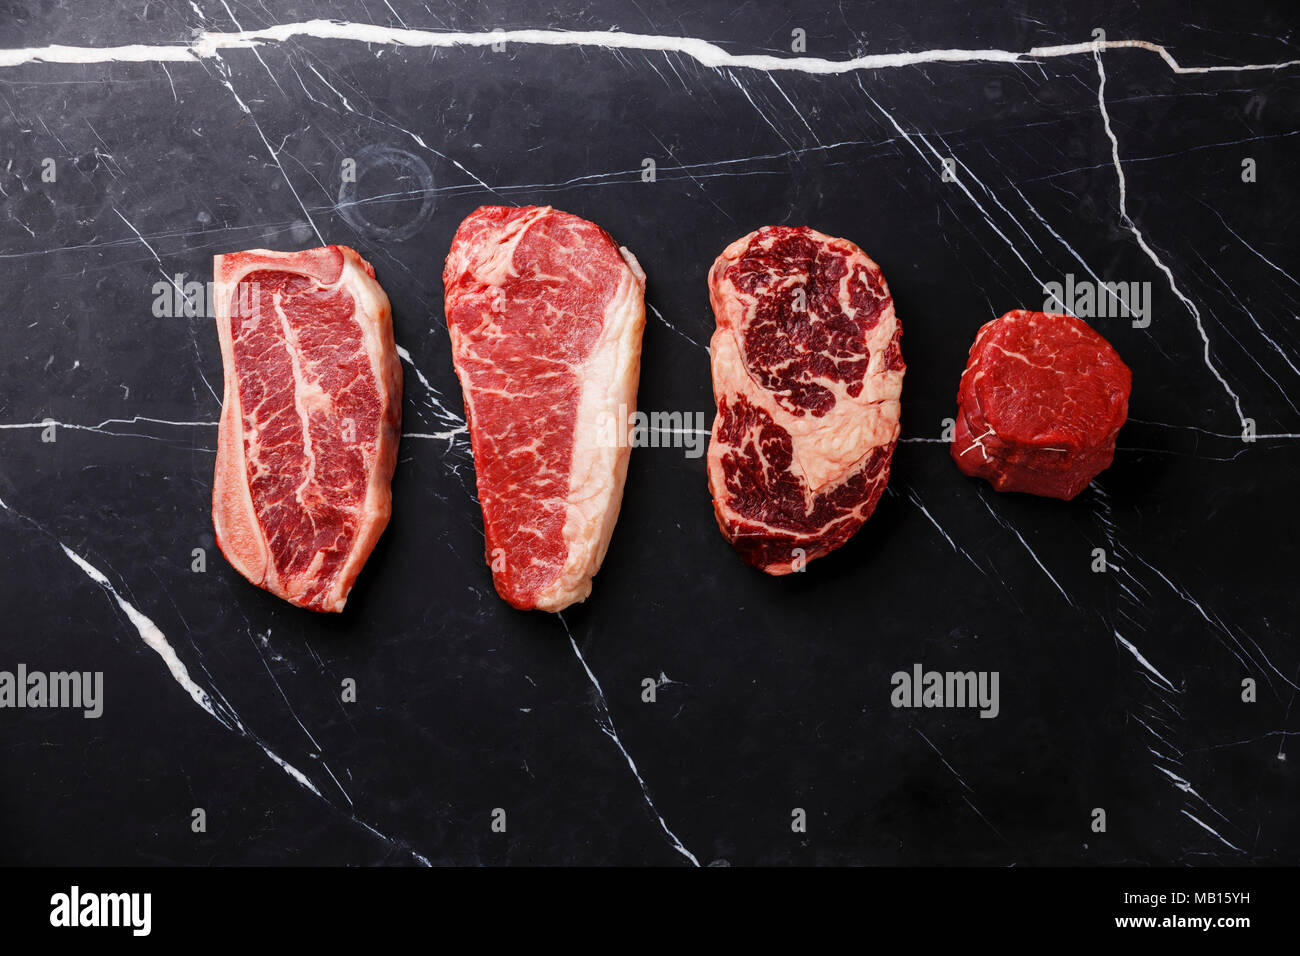 Variety of Raw Black Angus Prime meat steaks Blade on bone, Striploin, Rib eye, Tenderloin fillet mignon on dark marble background copy space Stock Photo